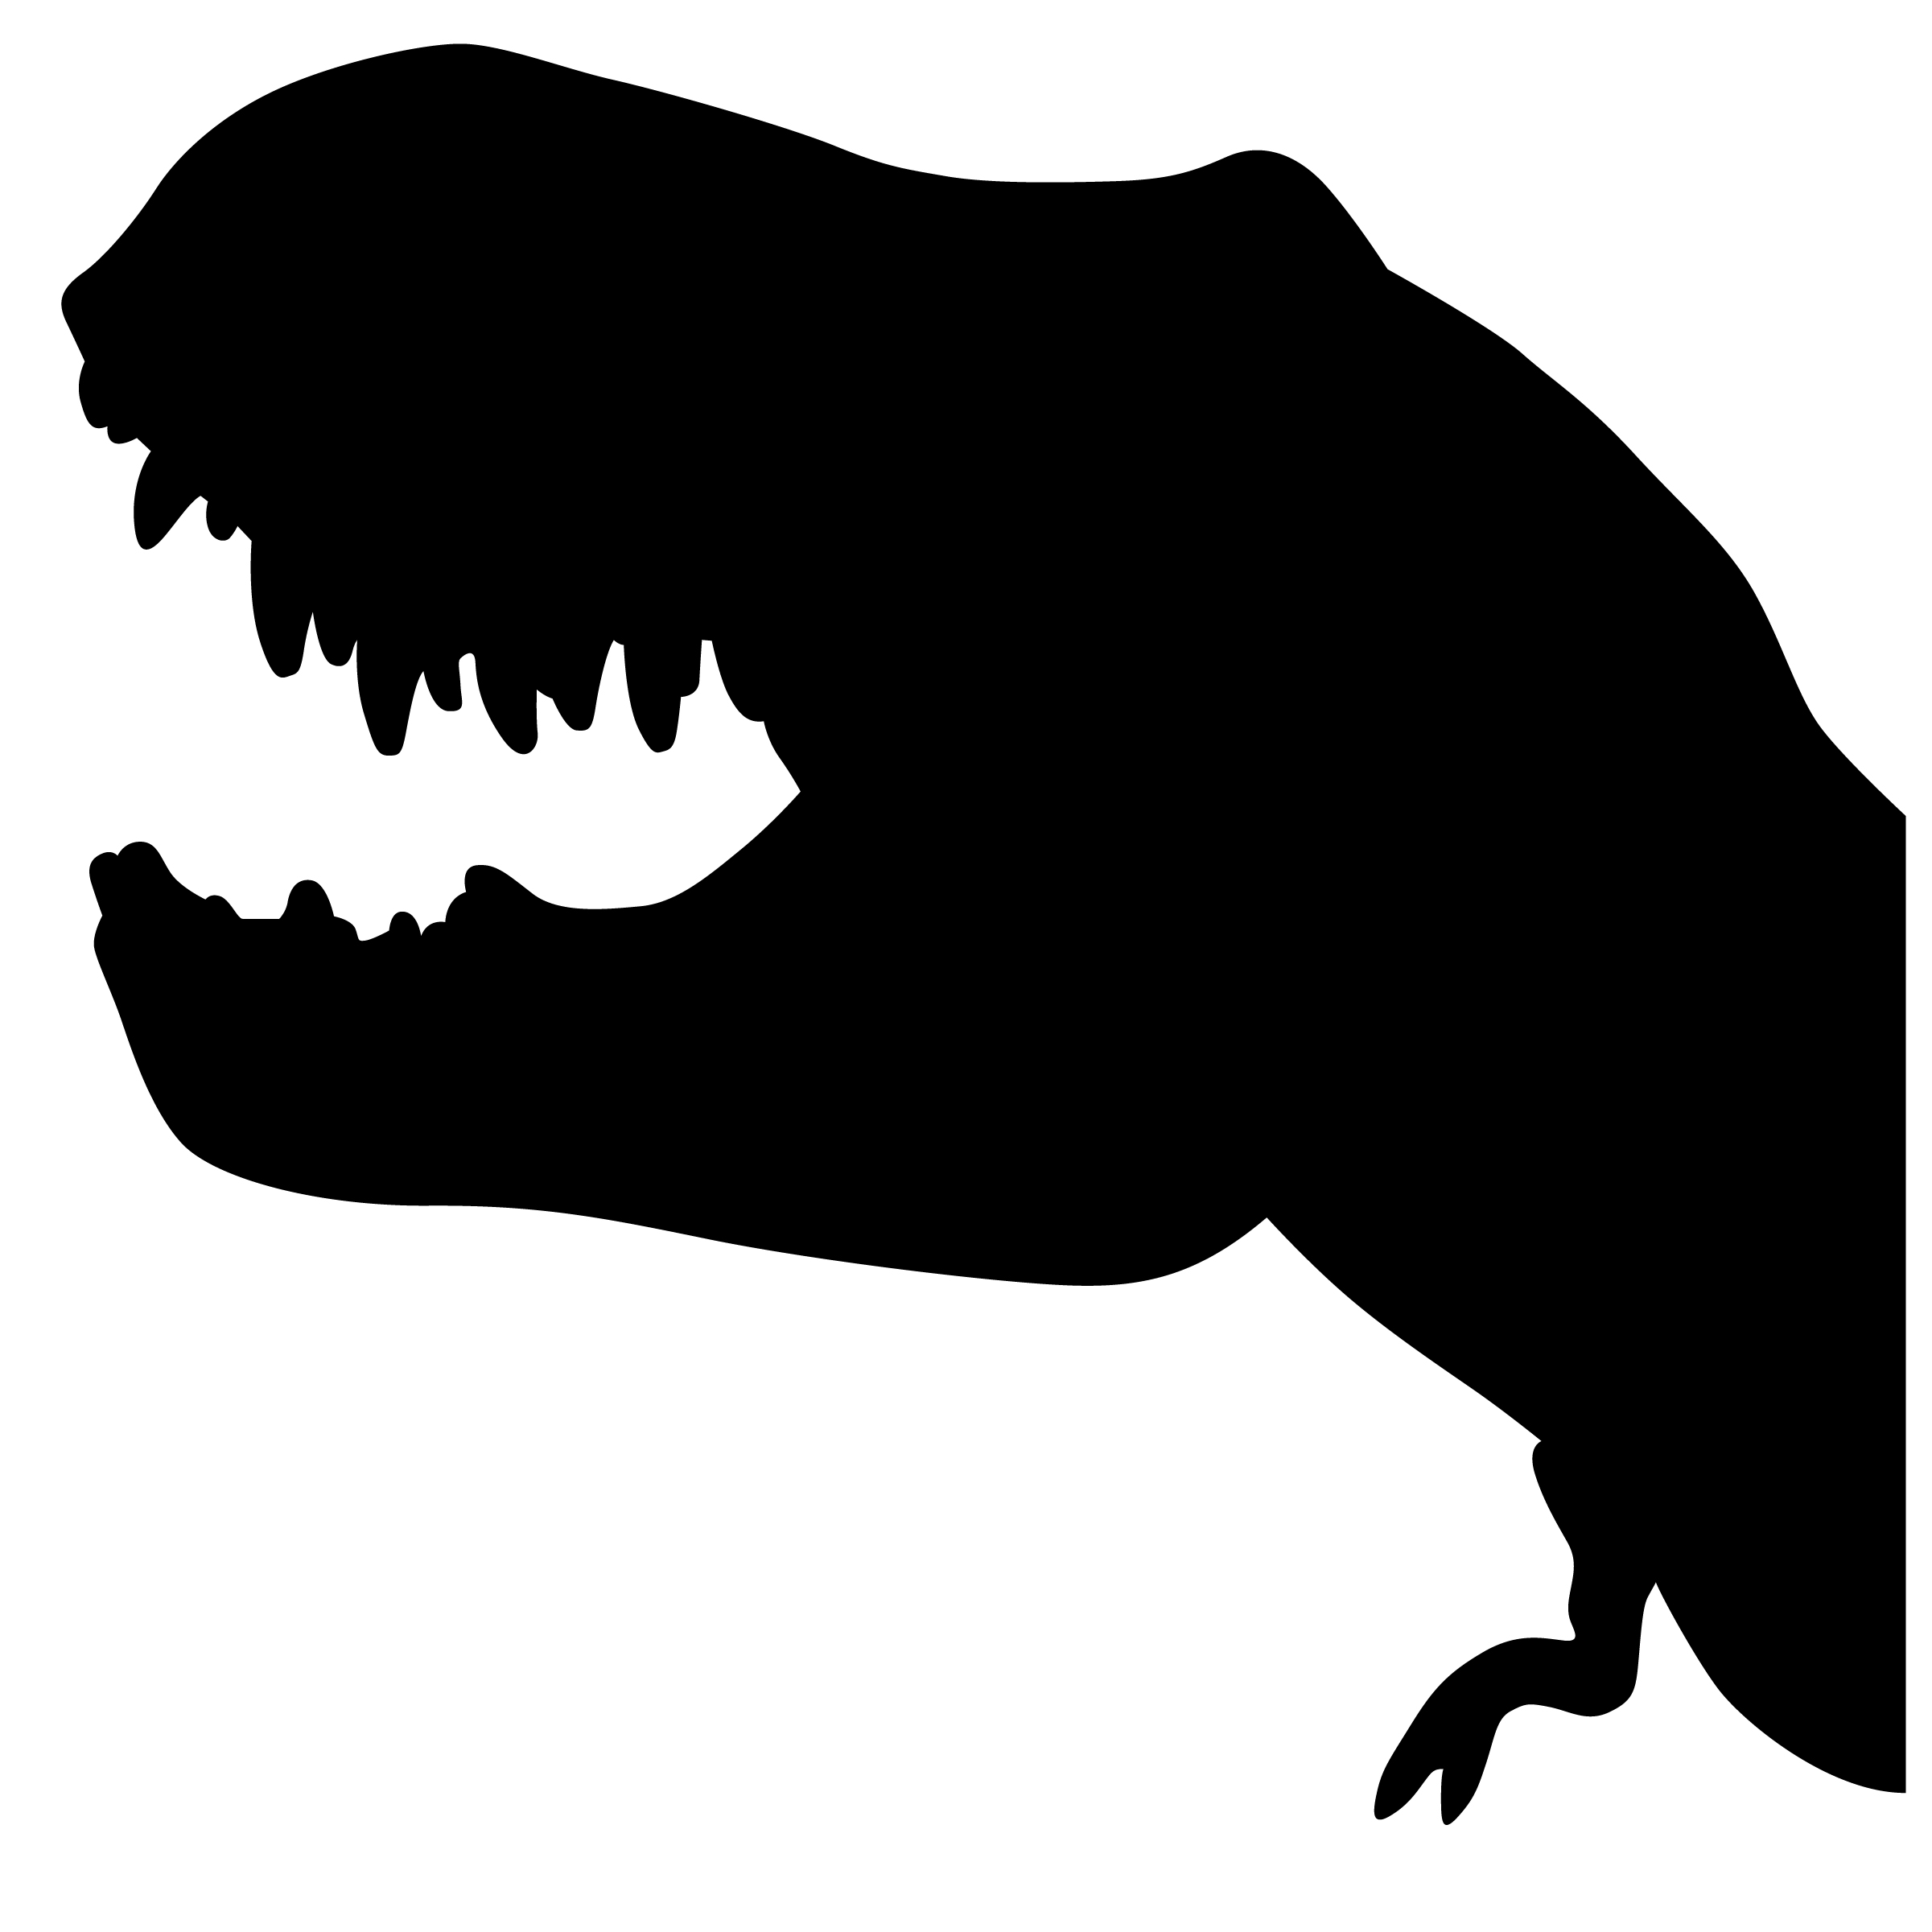 Download t-rex vector eps - Download Free Vectors, Clipart Graphics & Vector Art